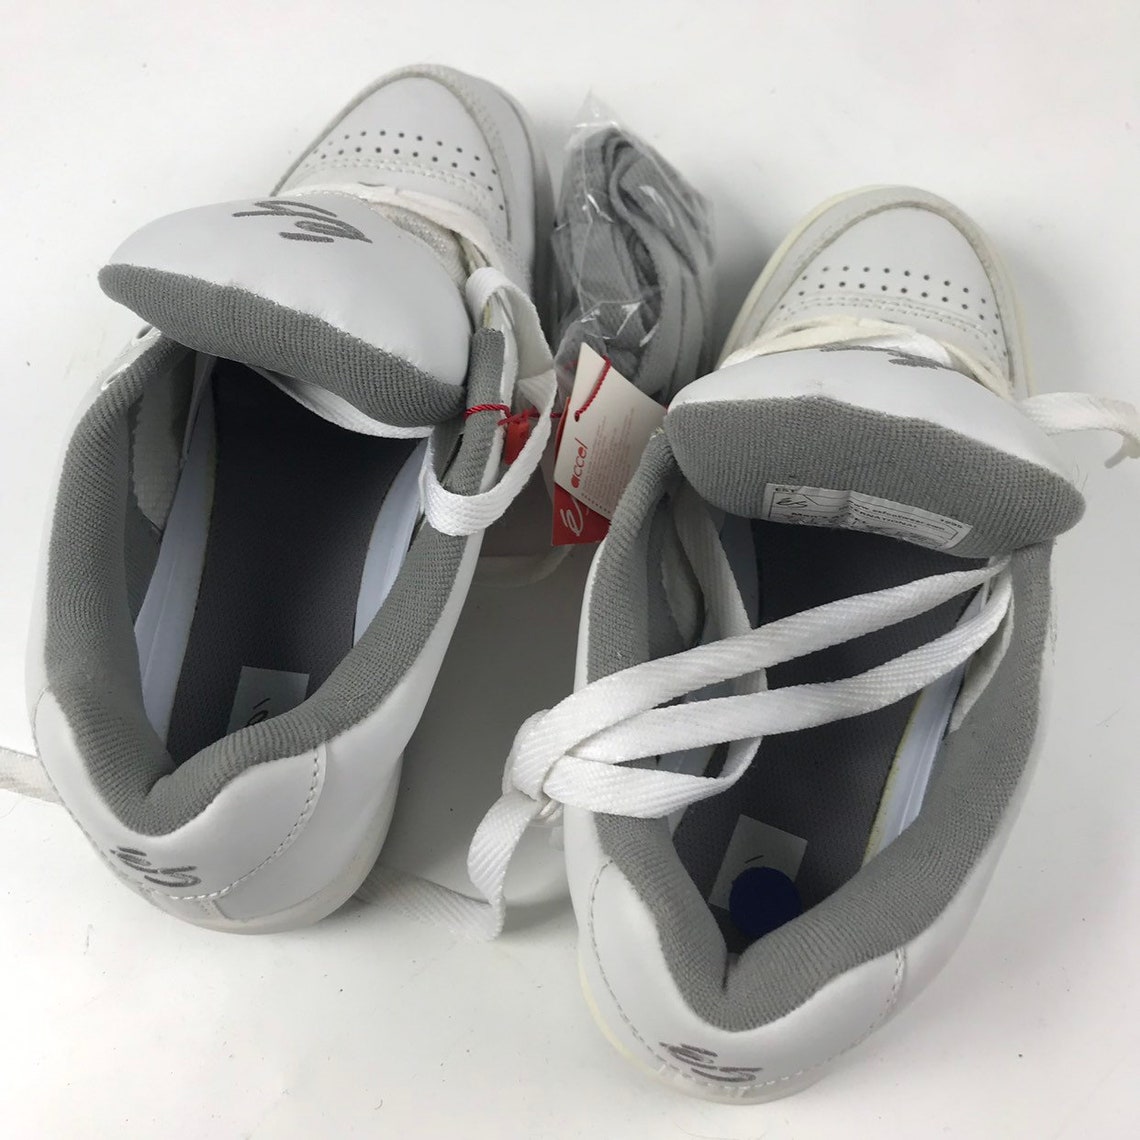 ES Accel skate shoes sz 7 white leather 2000s y2k | Etsy